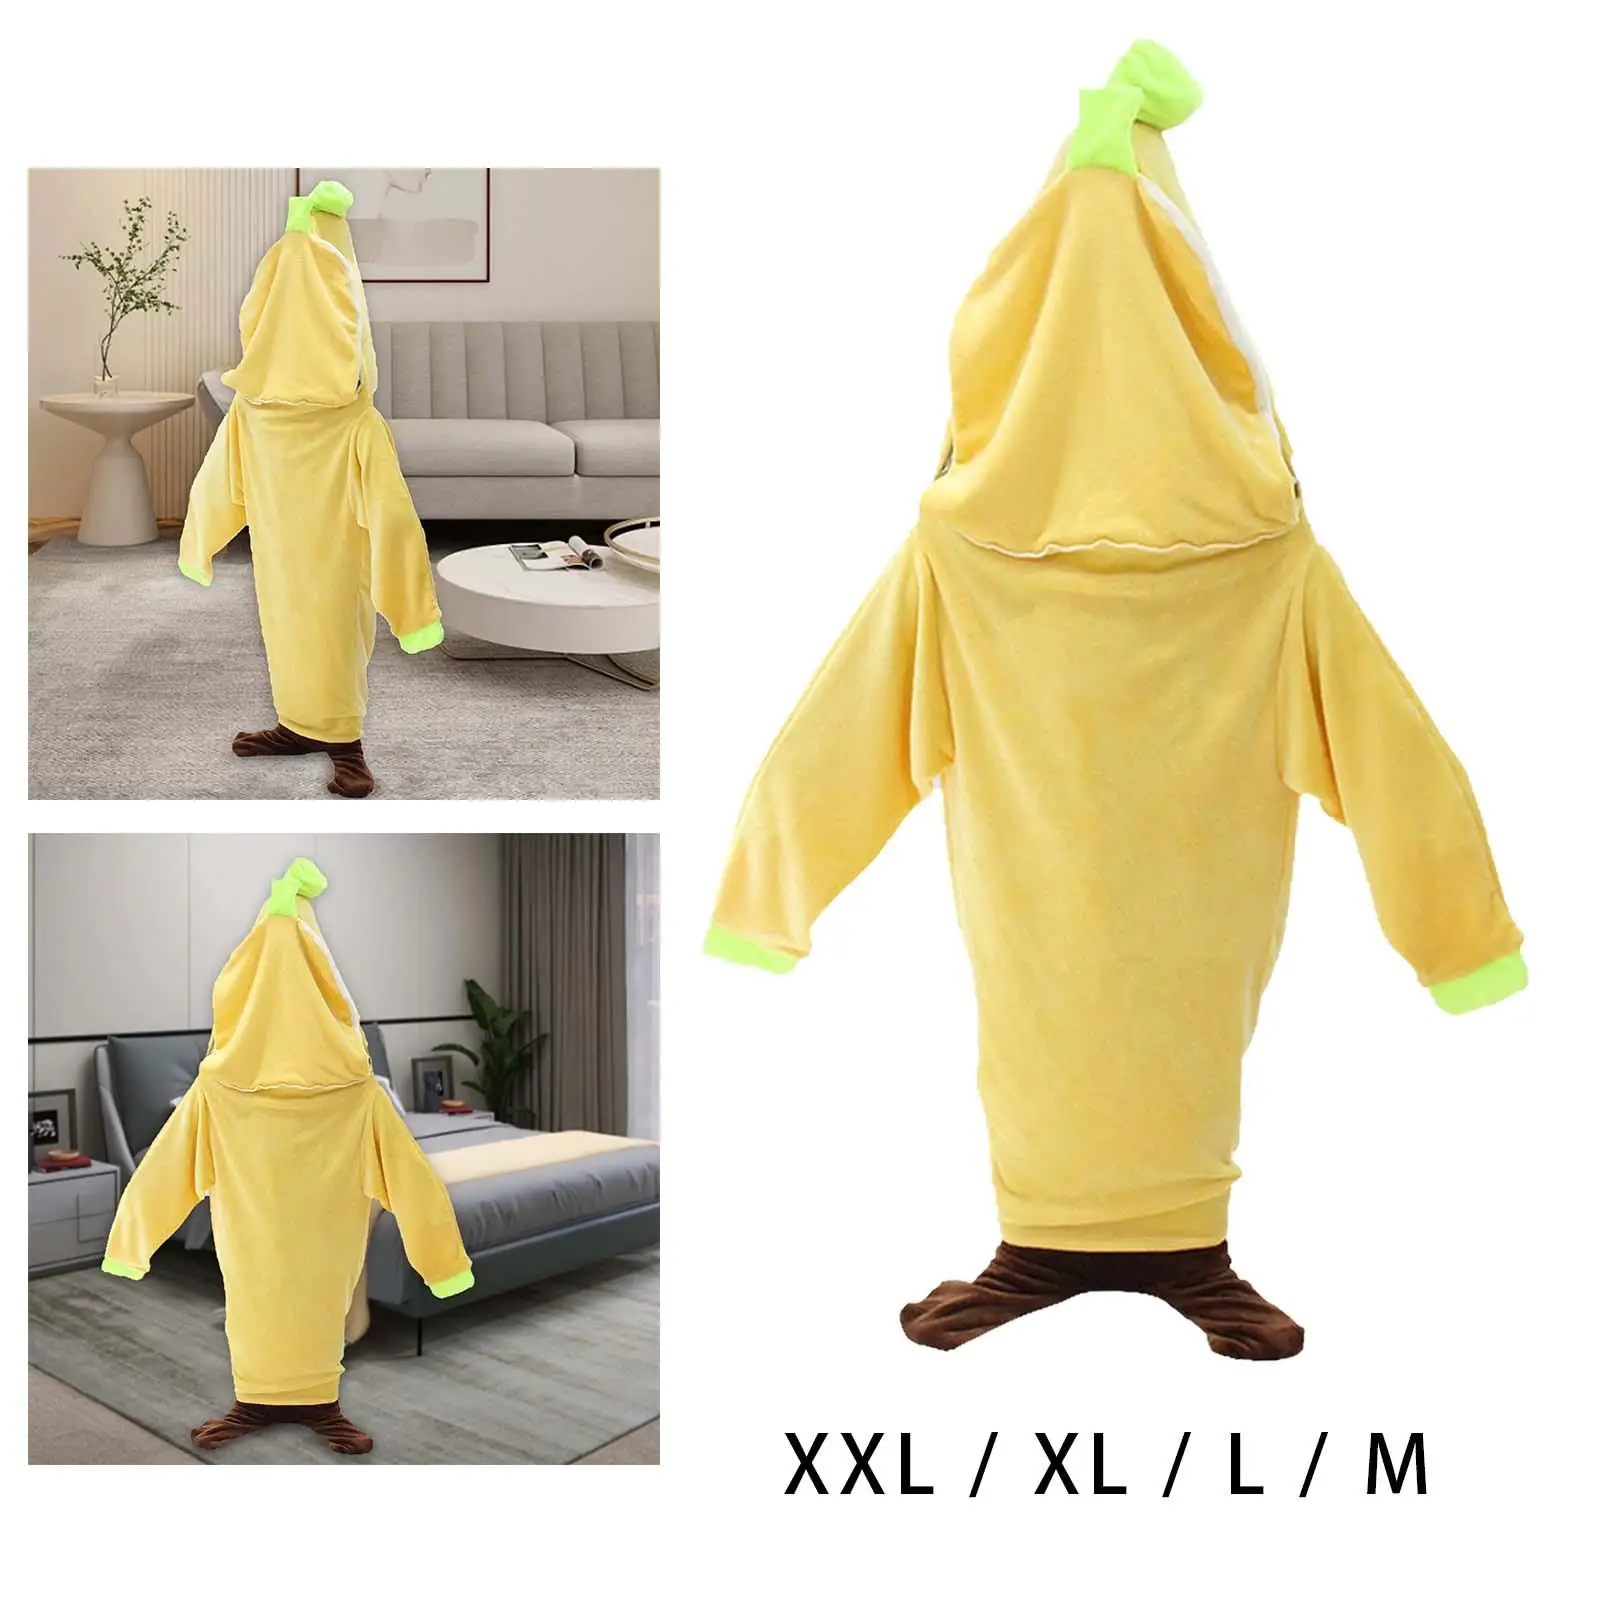 Wearable Banana Blanket Hooded Blanket Nightgown Nightdress Easter Clothing Celebration Cosplay Banana Fruit Sleeping Bag Cute